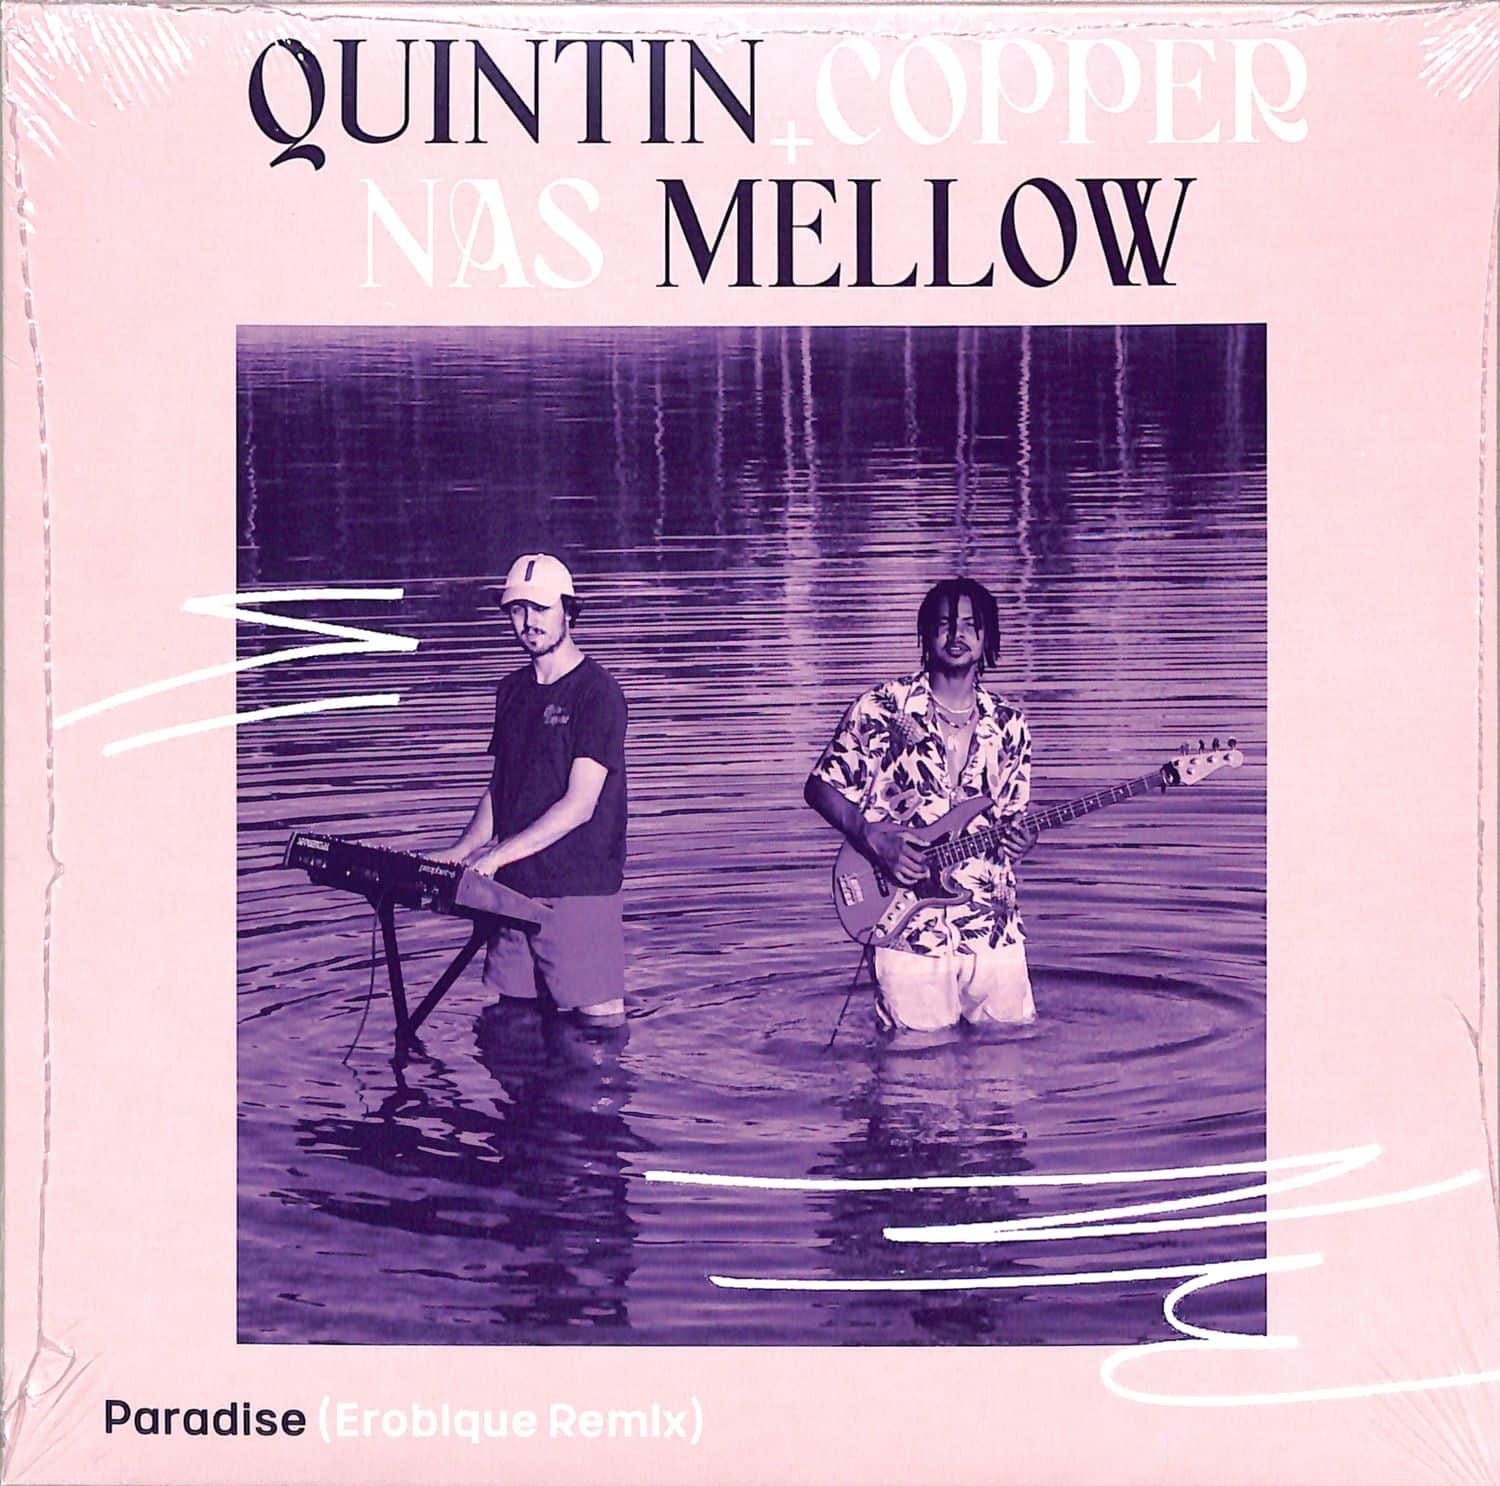 Quintin Copper & Nas Mellow - PARADISE 